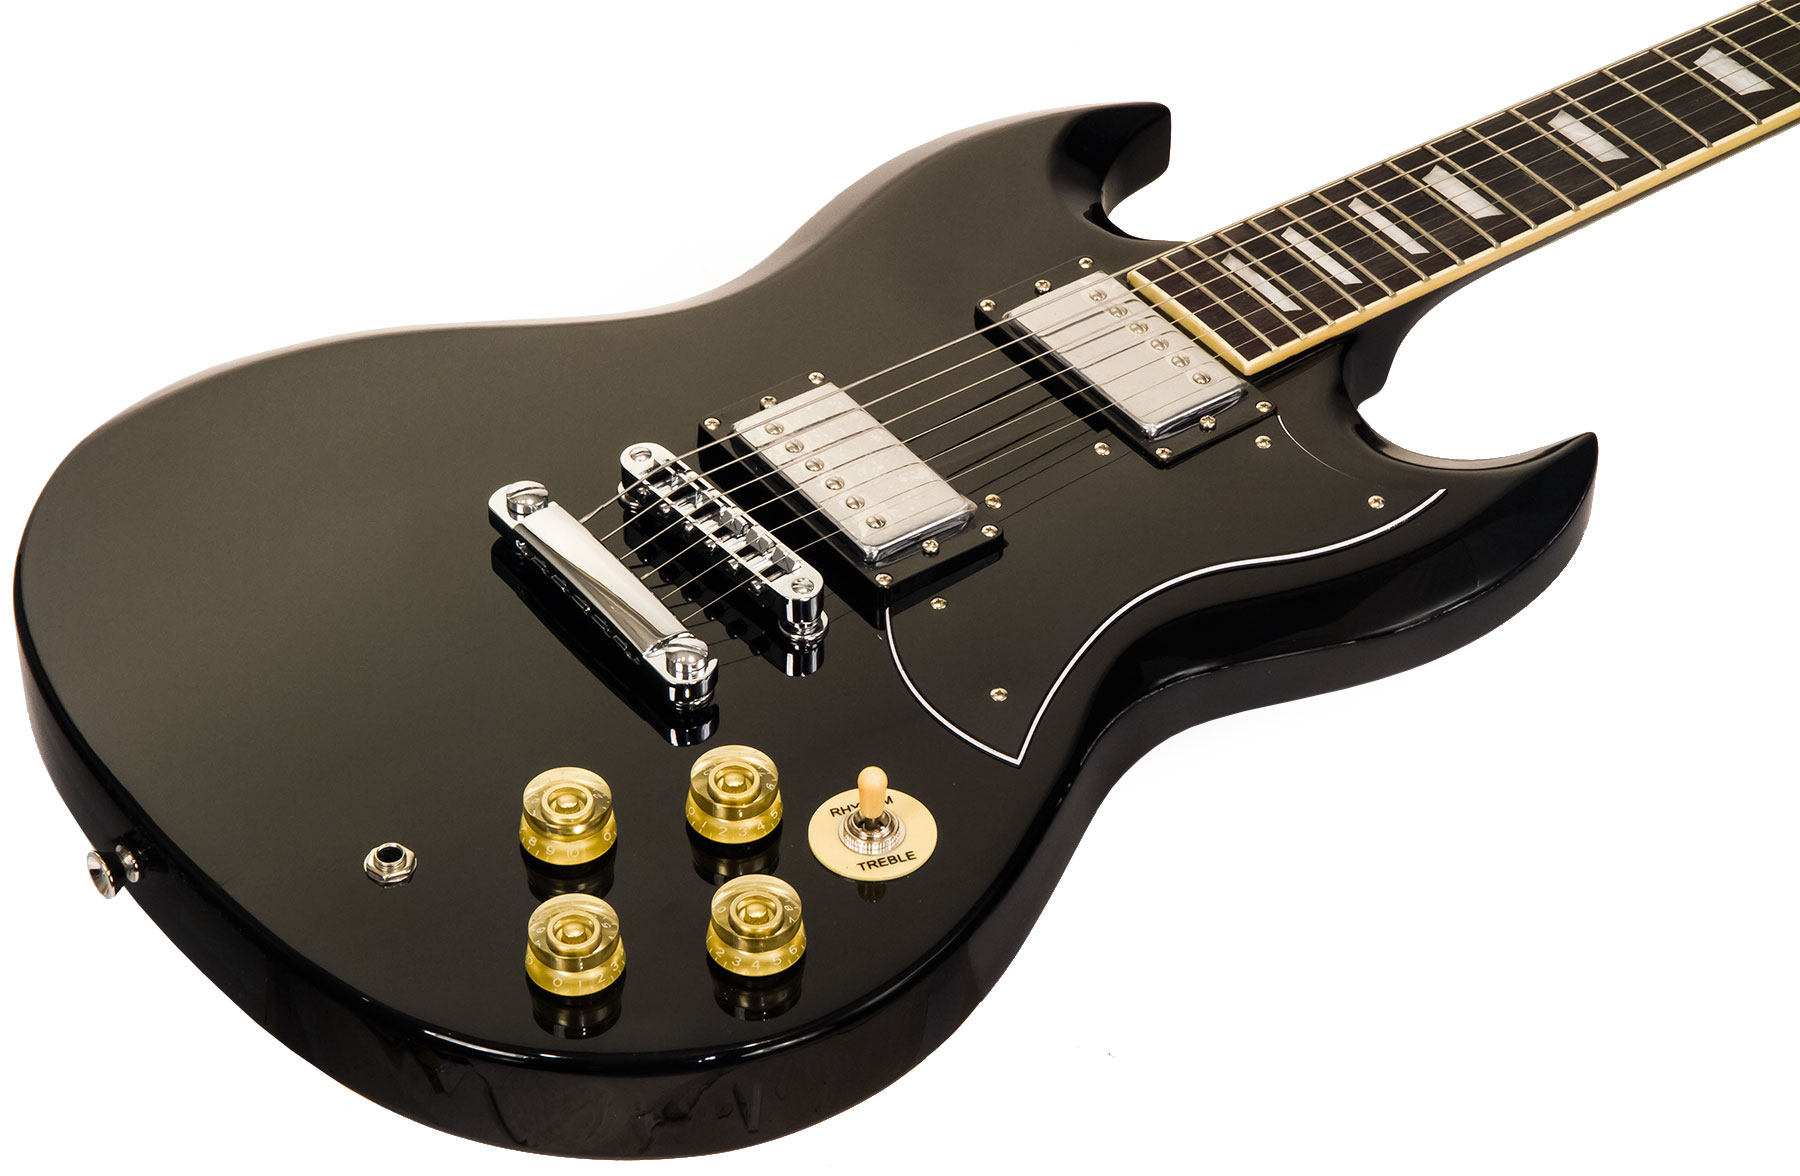 Eastone Sdc70 +marshall Mg10g Gold +cable +housse +courroie +mediators - Black - Pack Guitare Électrique - Variation 2